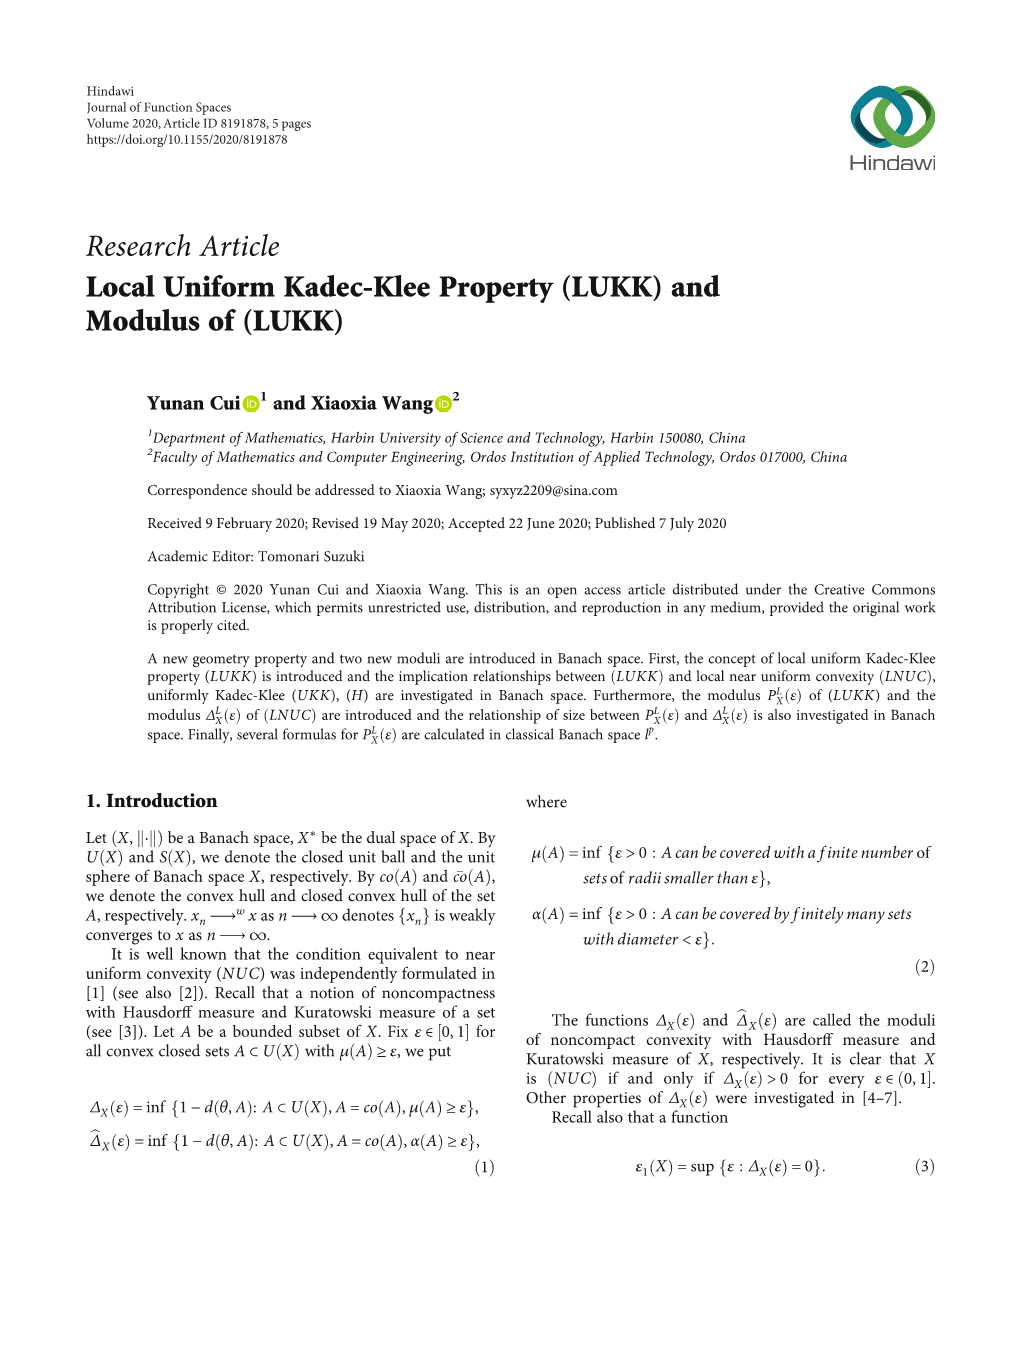 Local Uniform Kadec-Klee Property (LUKK) and Modulus of (LUKK)